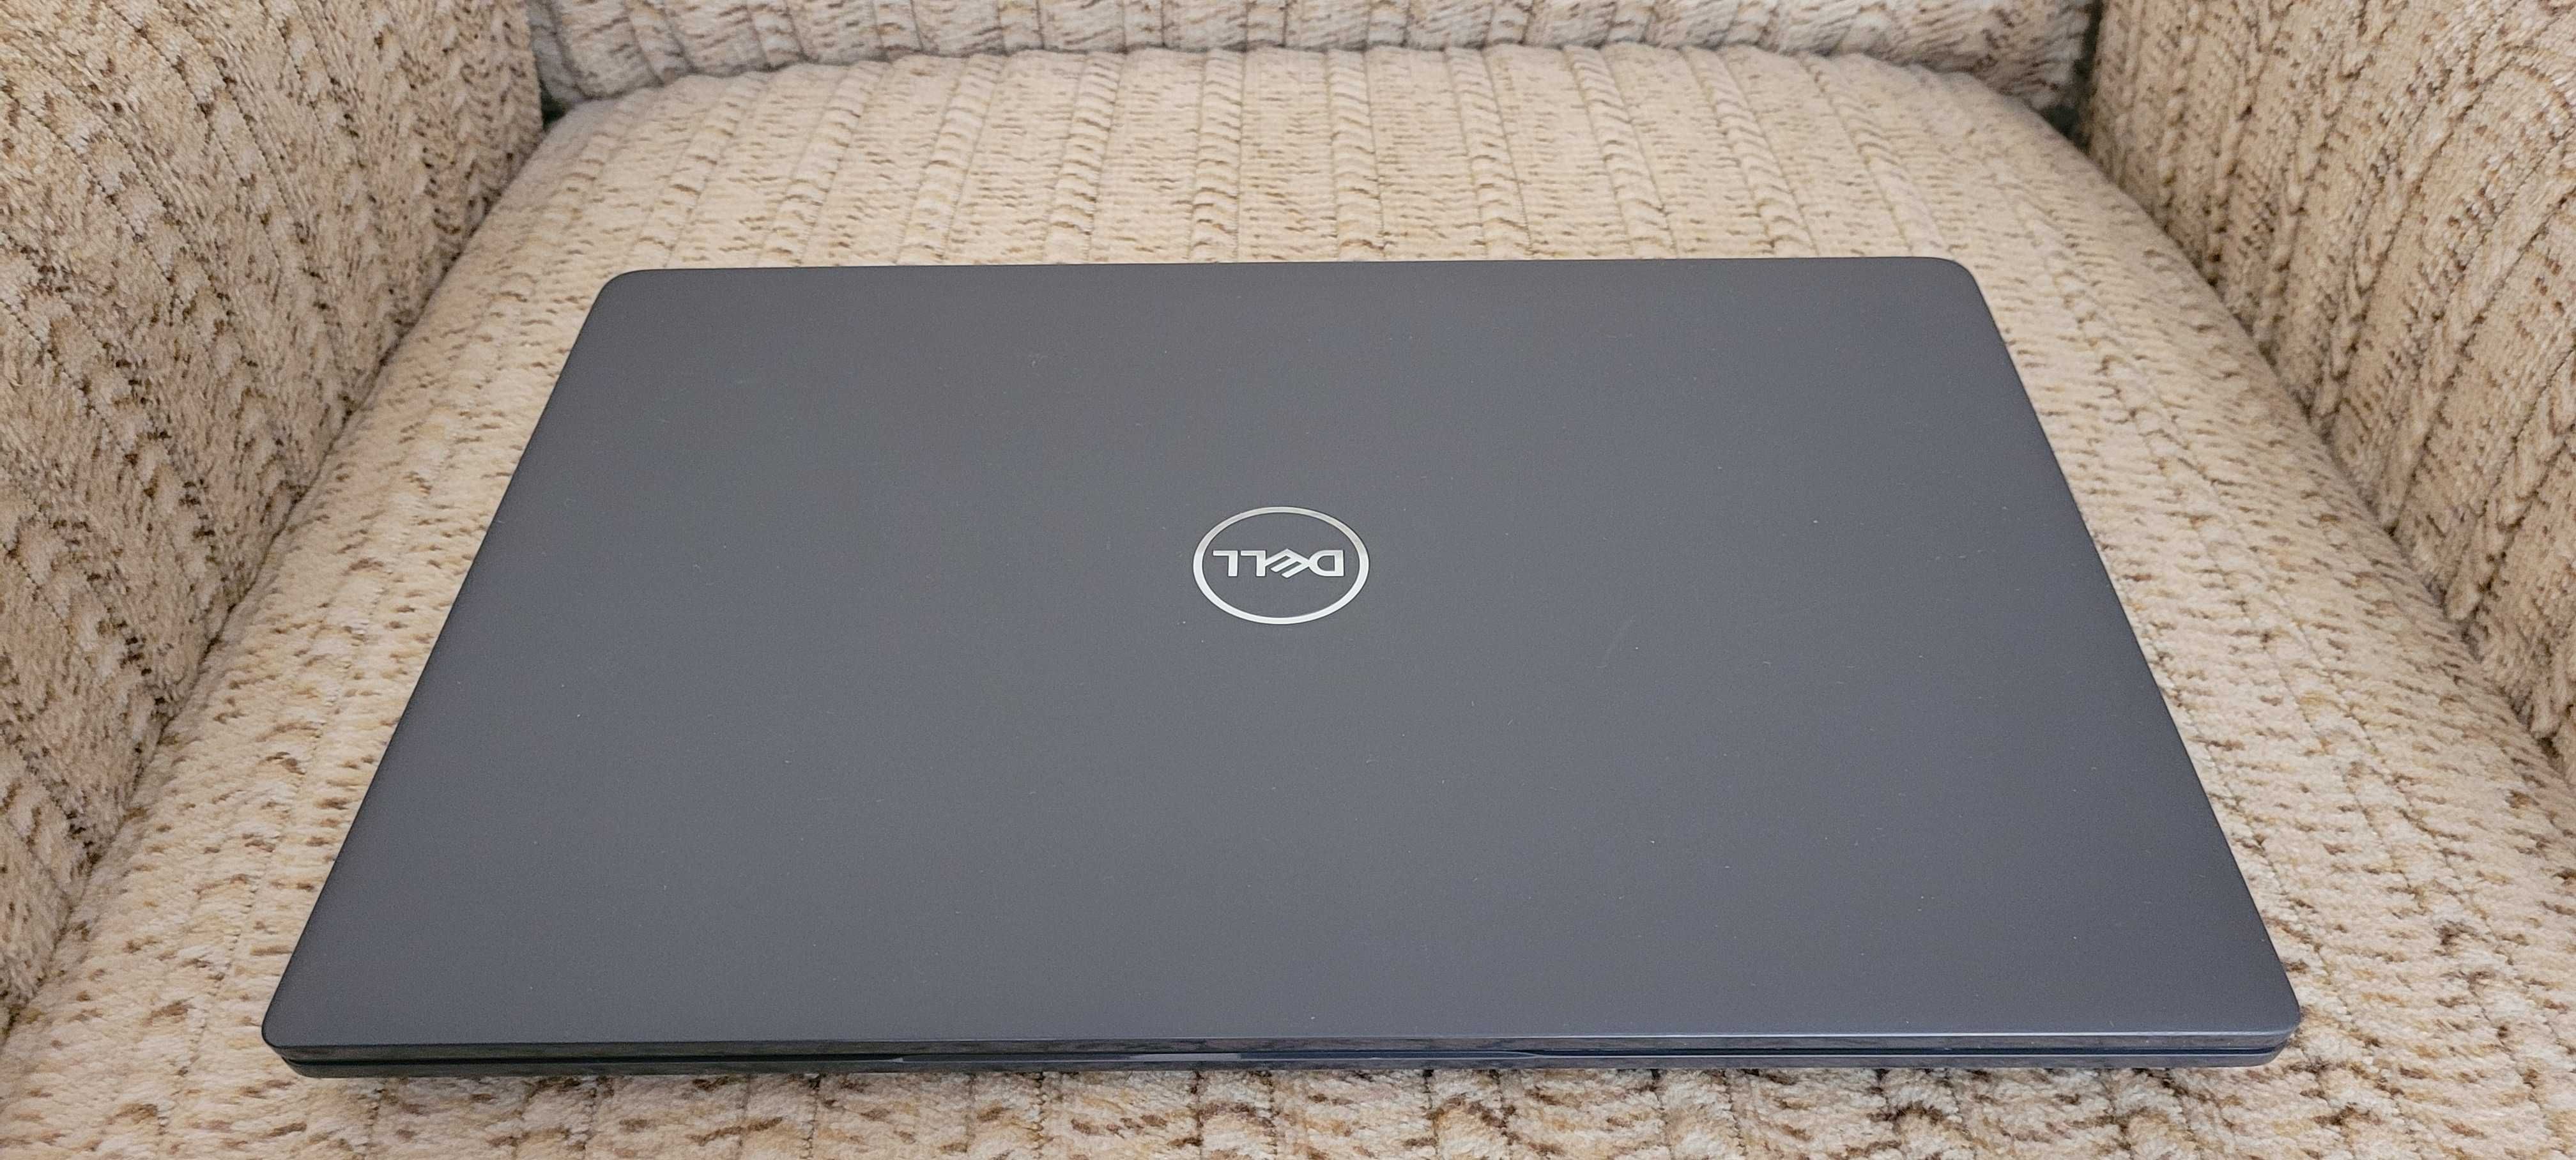 laptop Dell i7 ssd 512 gb 16 ram